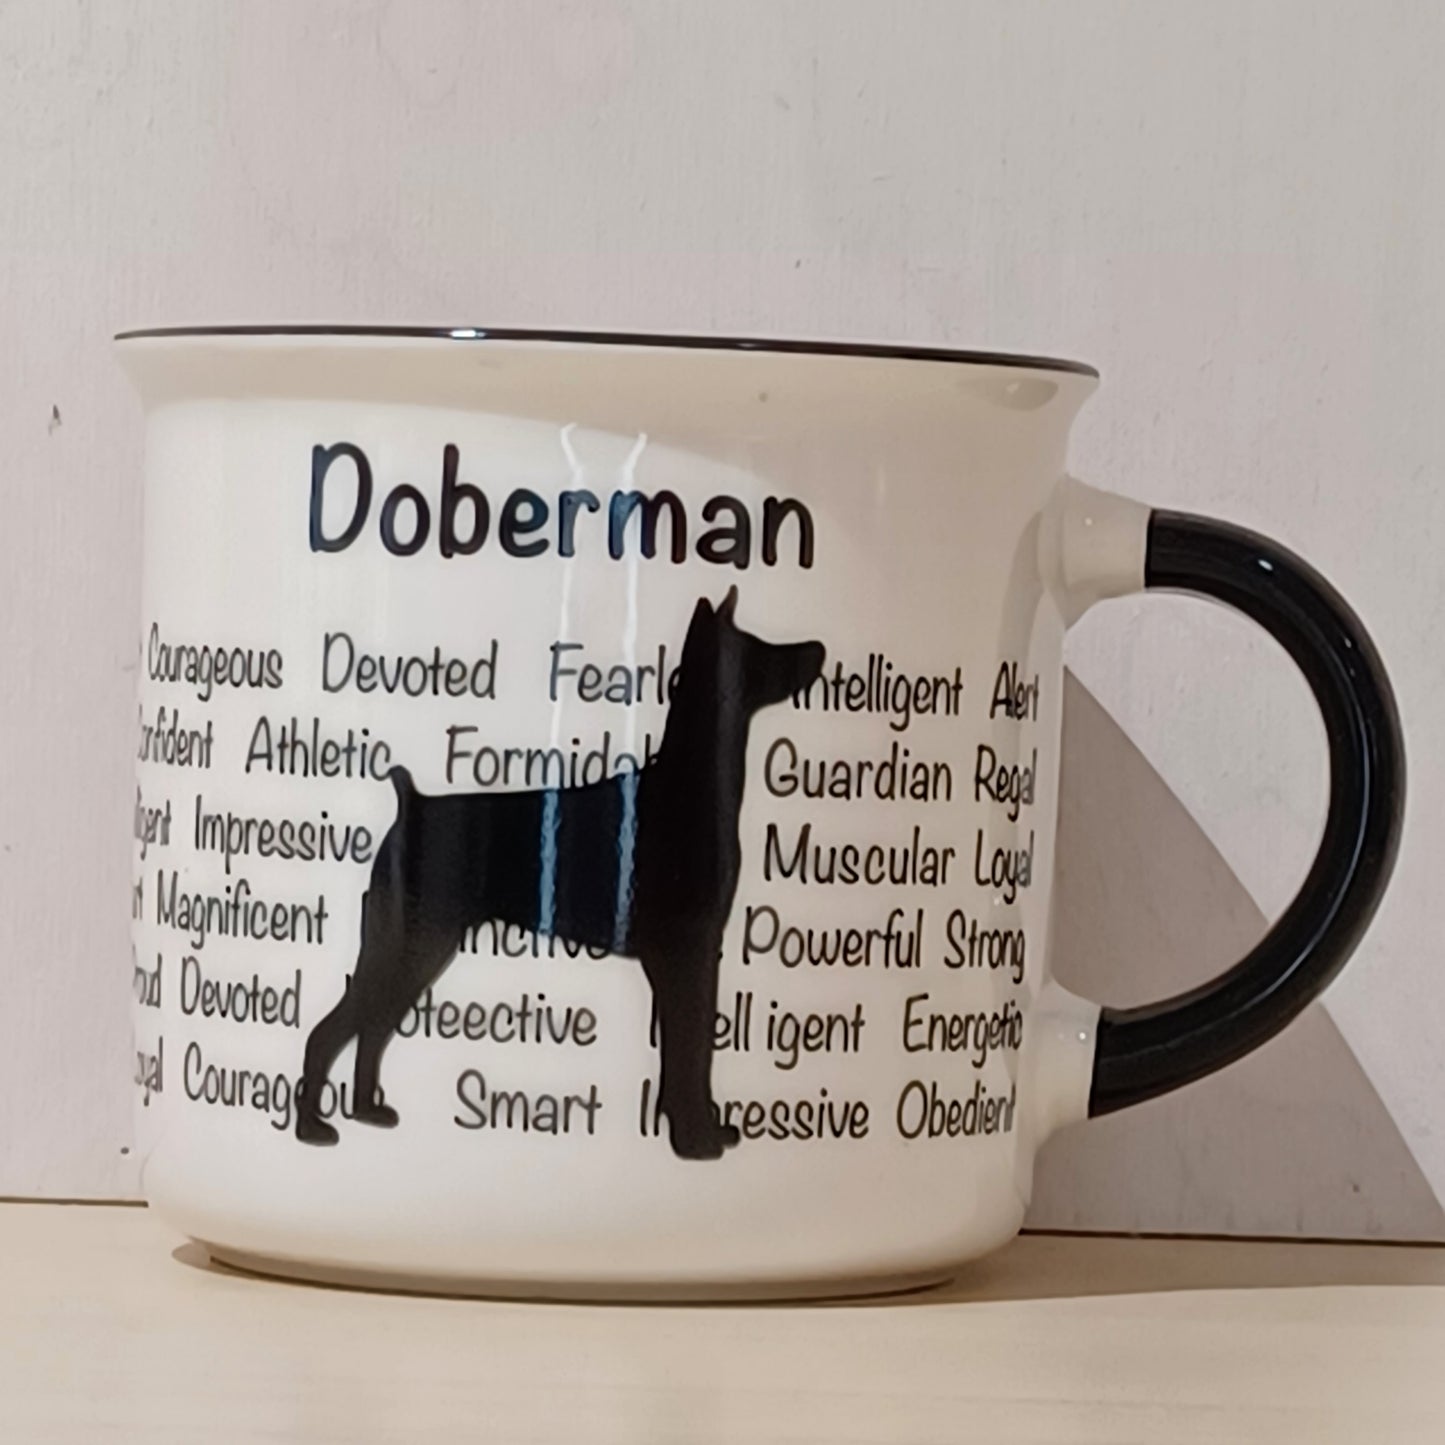 Pet Mug - Doberman